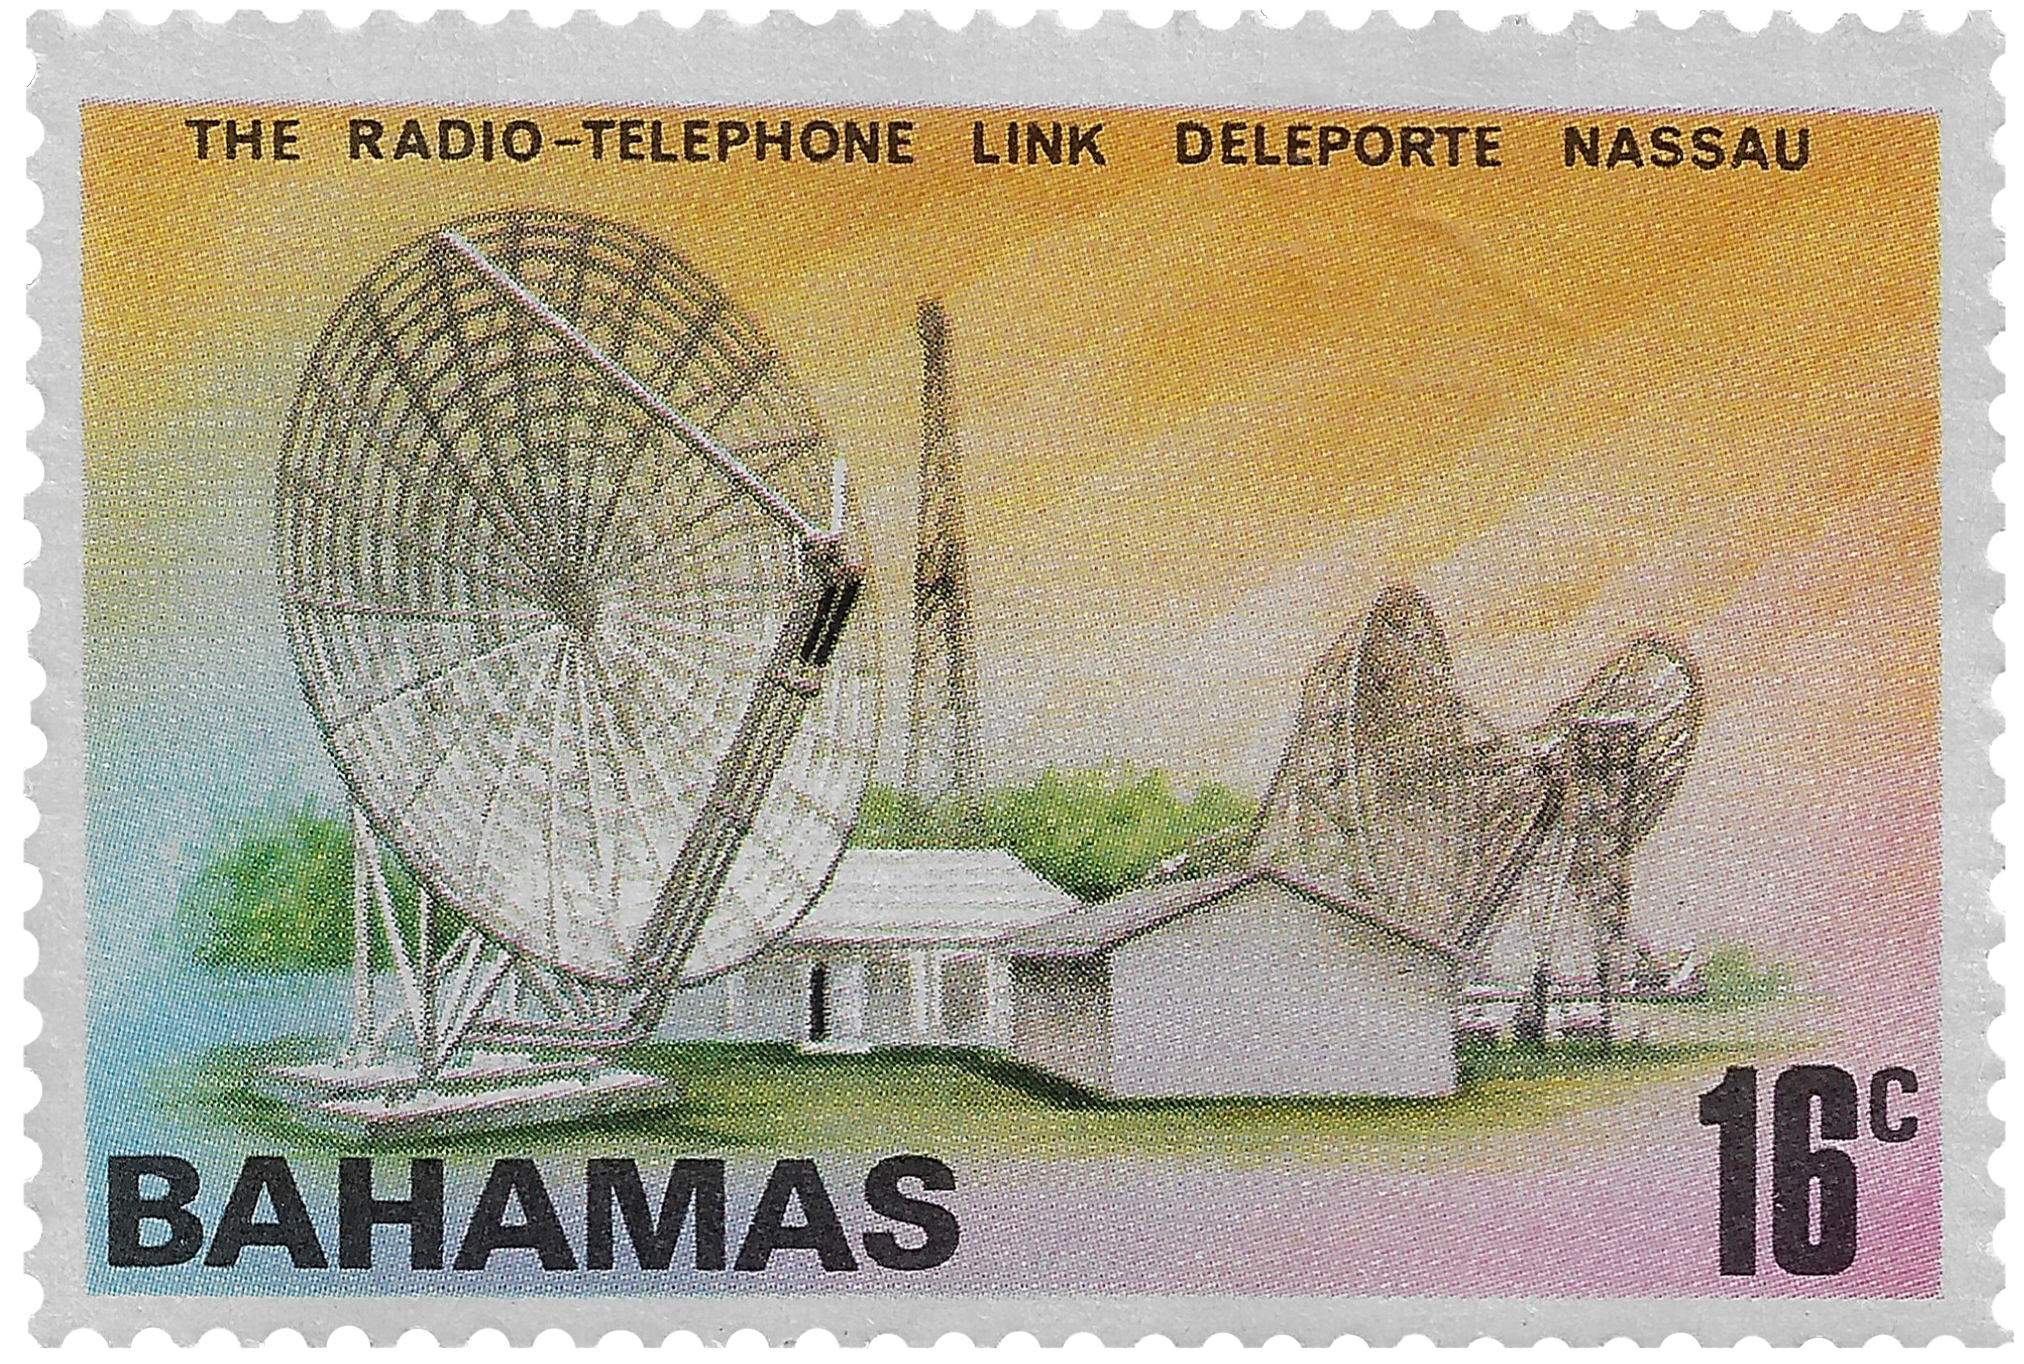 16c 1976, The Radio-Telephone Link Delporte Nassau